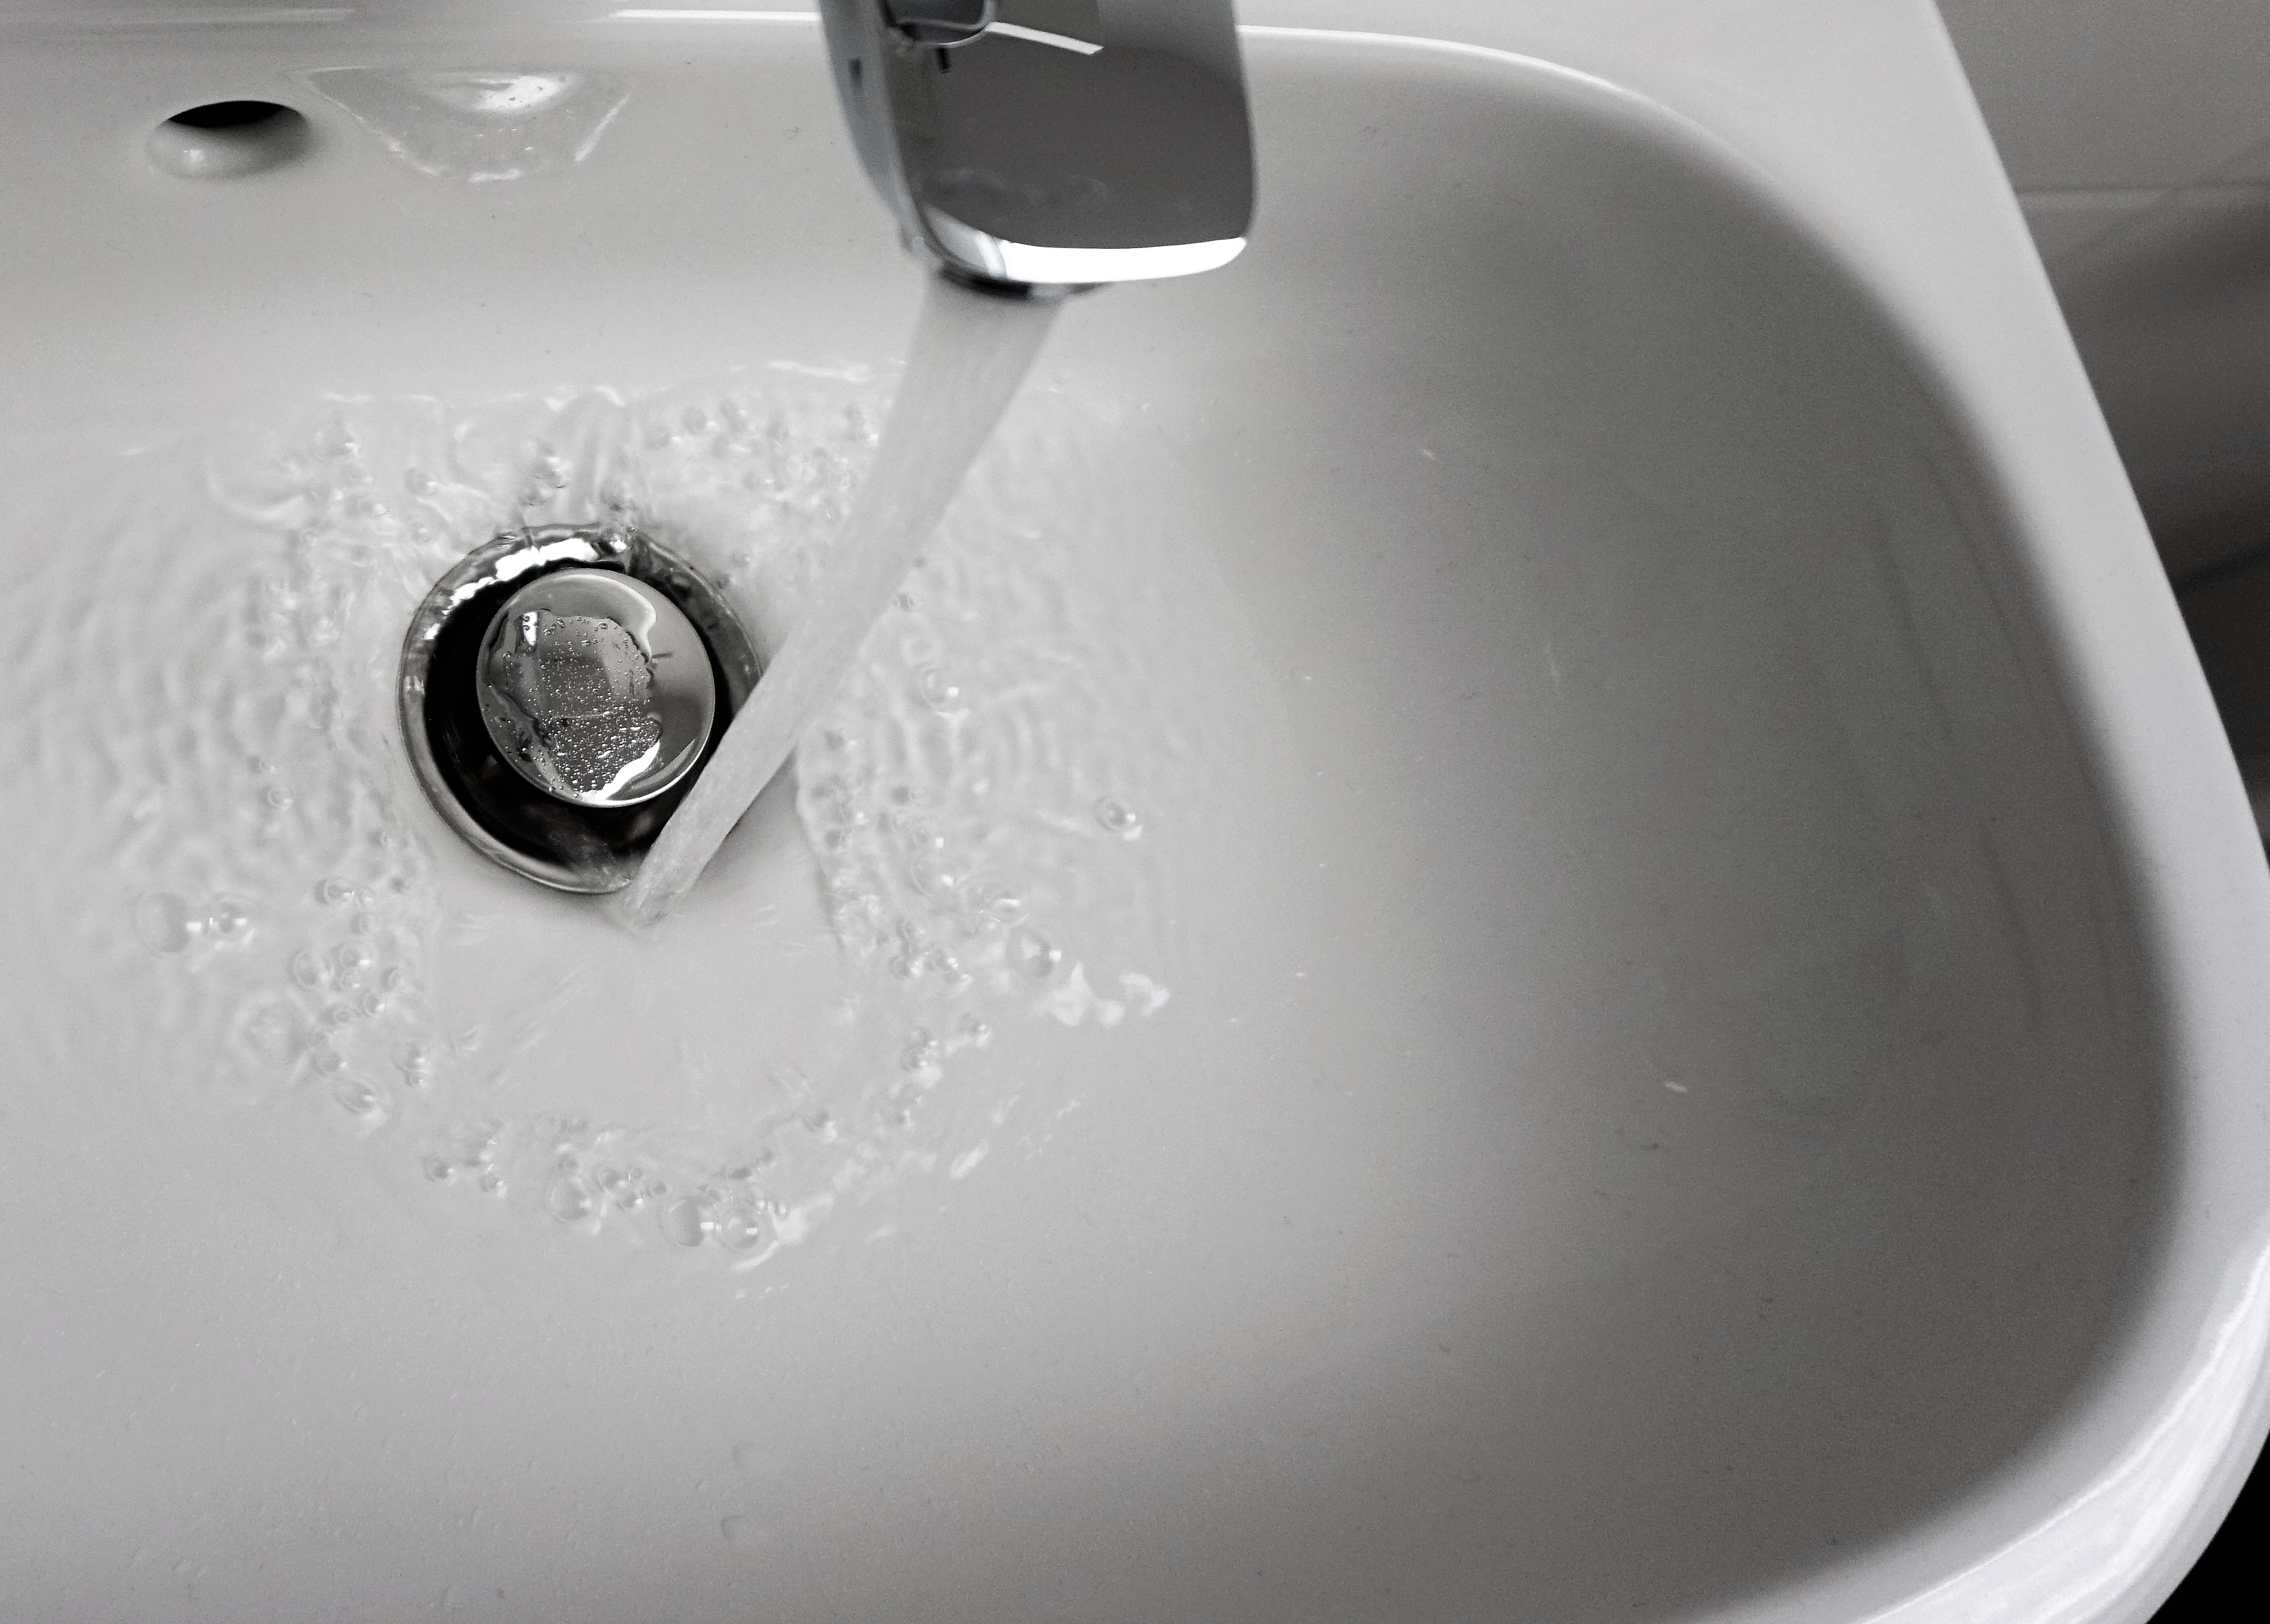 How to Unclog a Bathtub Drain: 11 DIY Clog-Busters